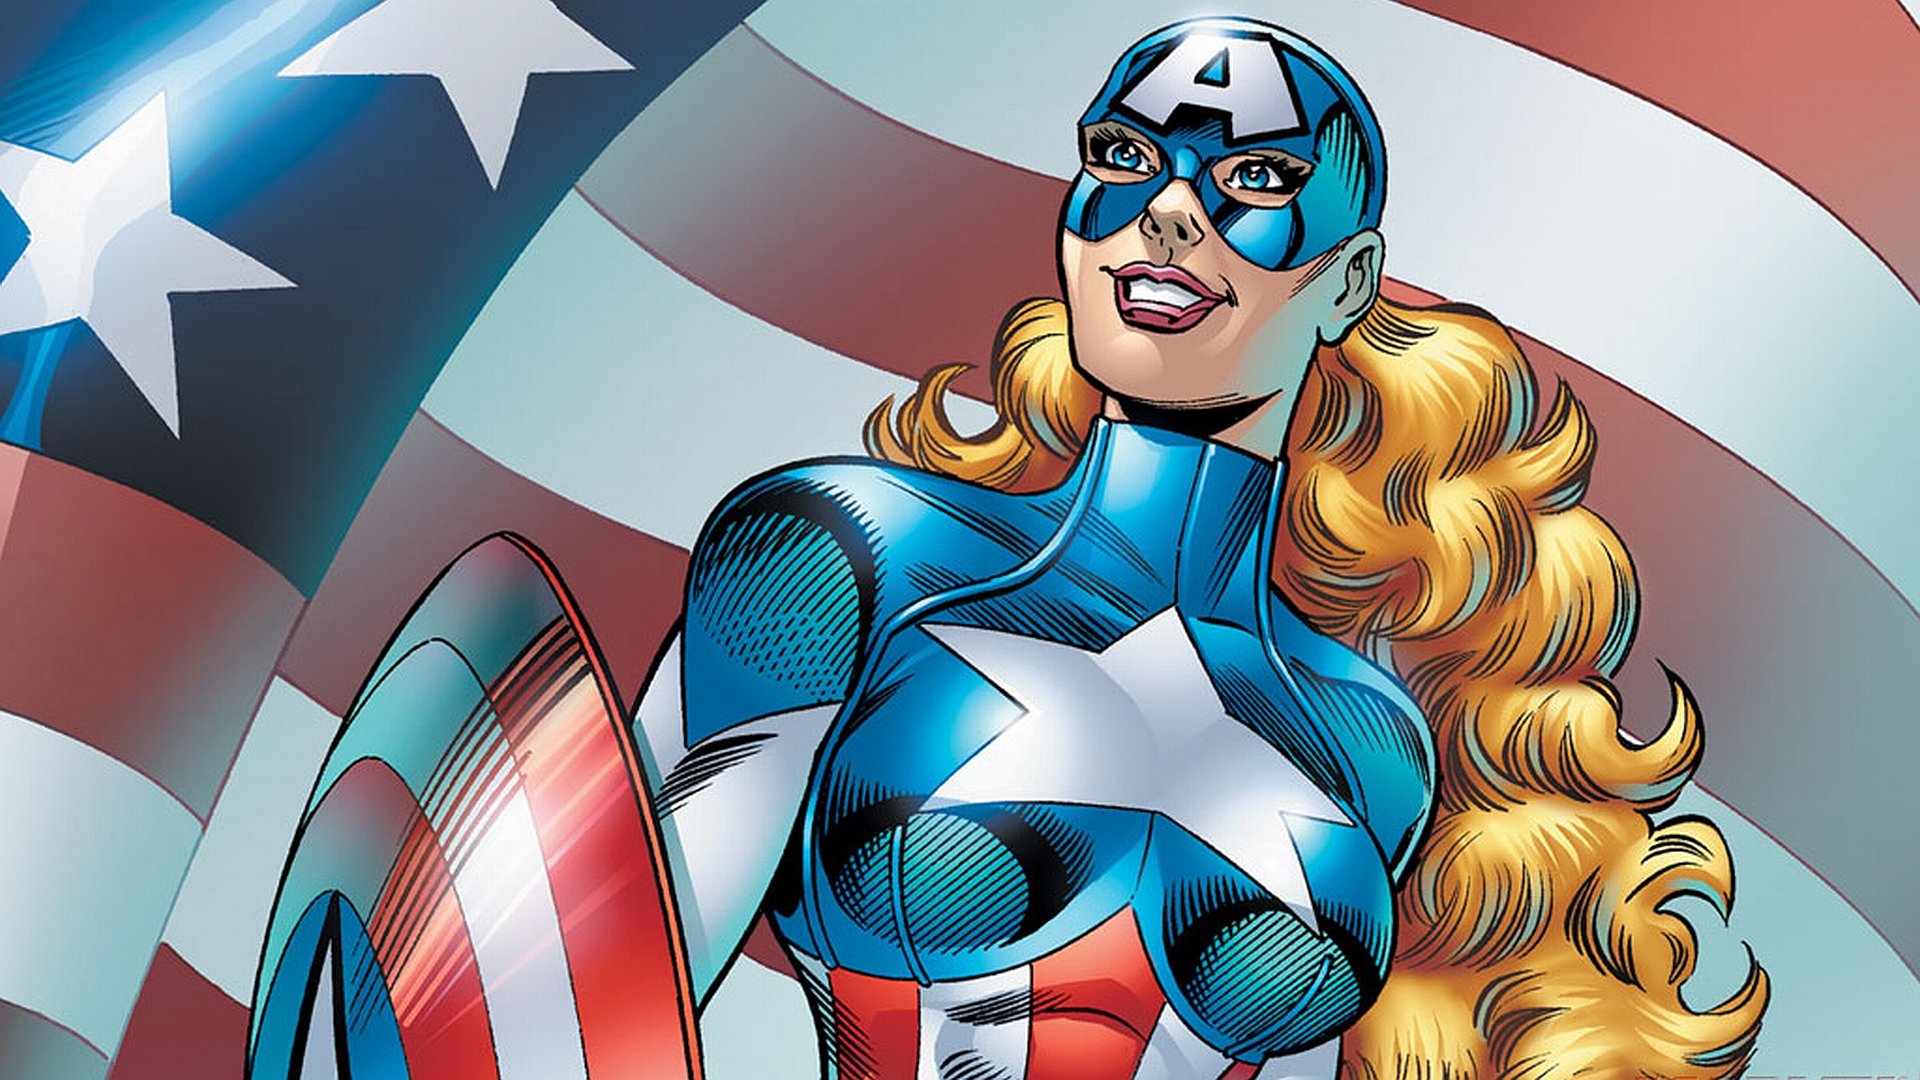 High resolution Captain America (Marvel comics) hd 1920x1080 wallpaper ID:292878 for PC